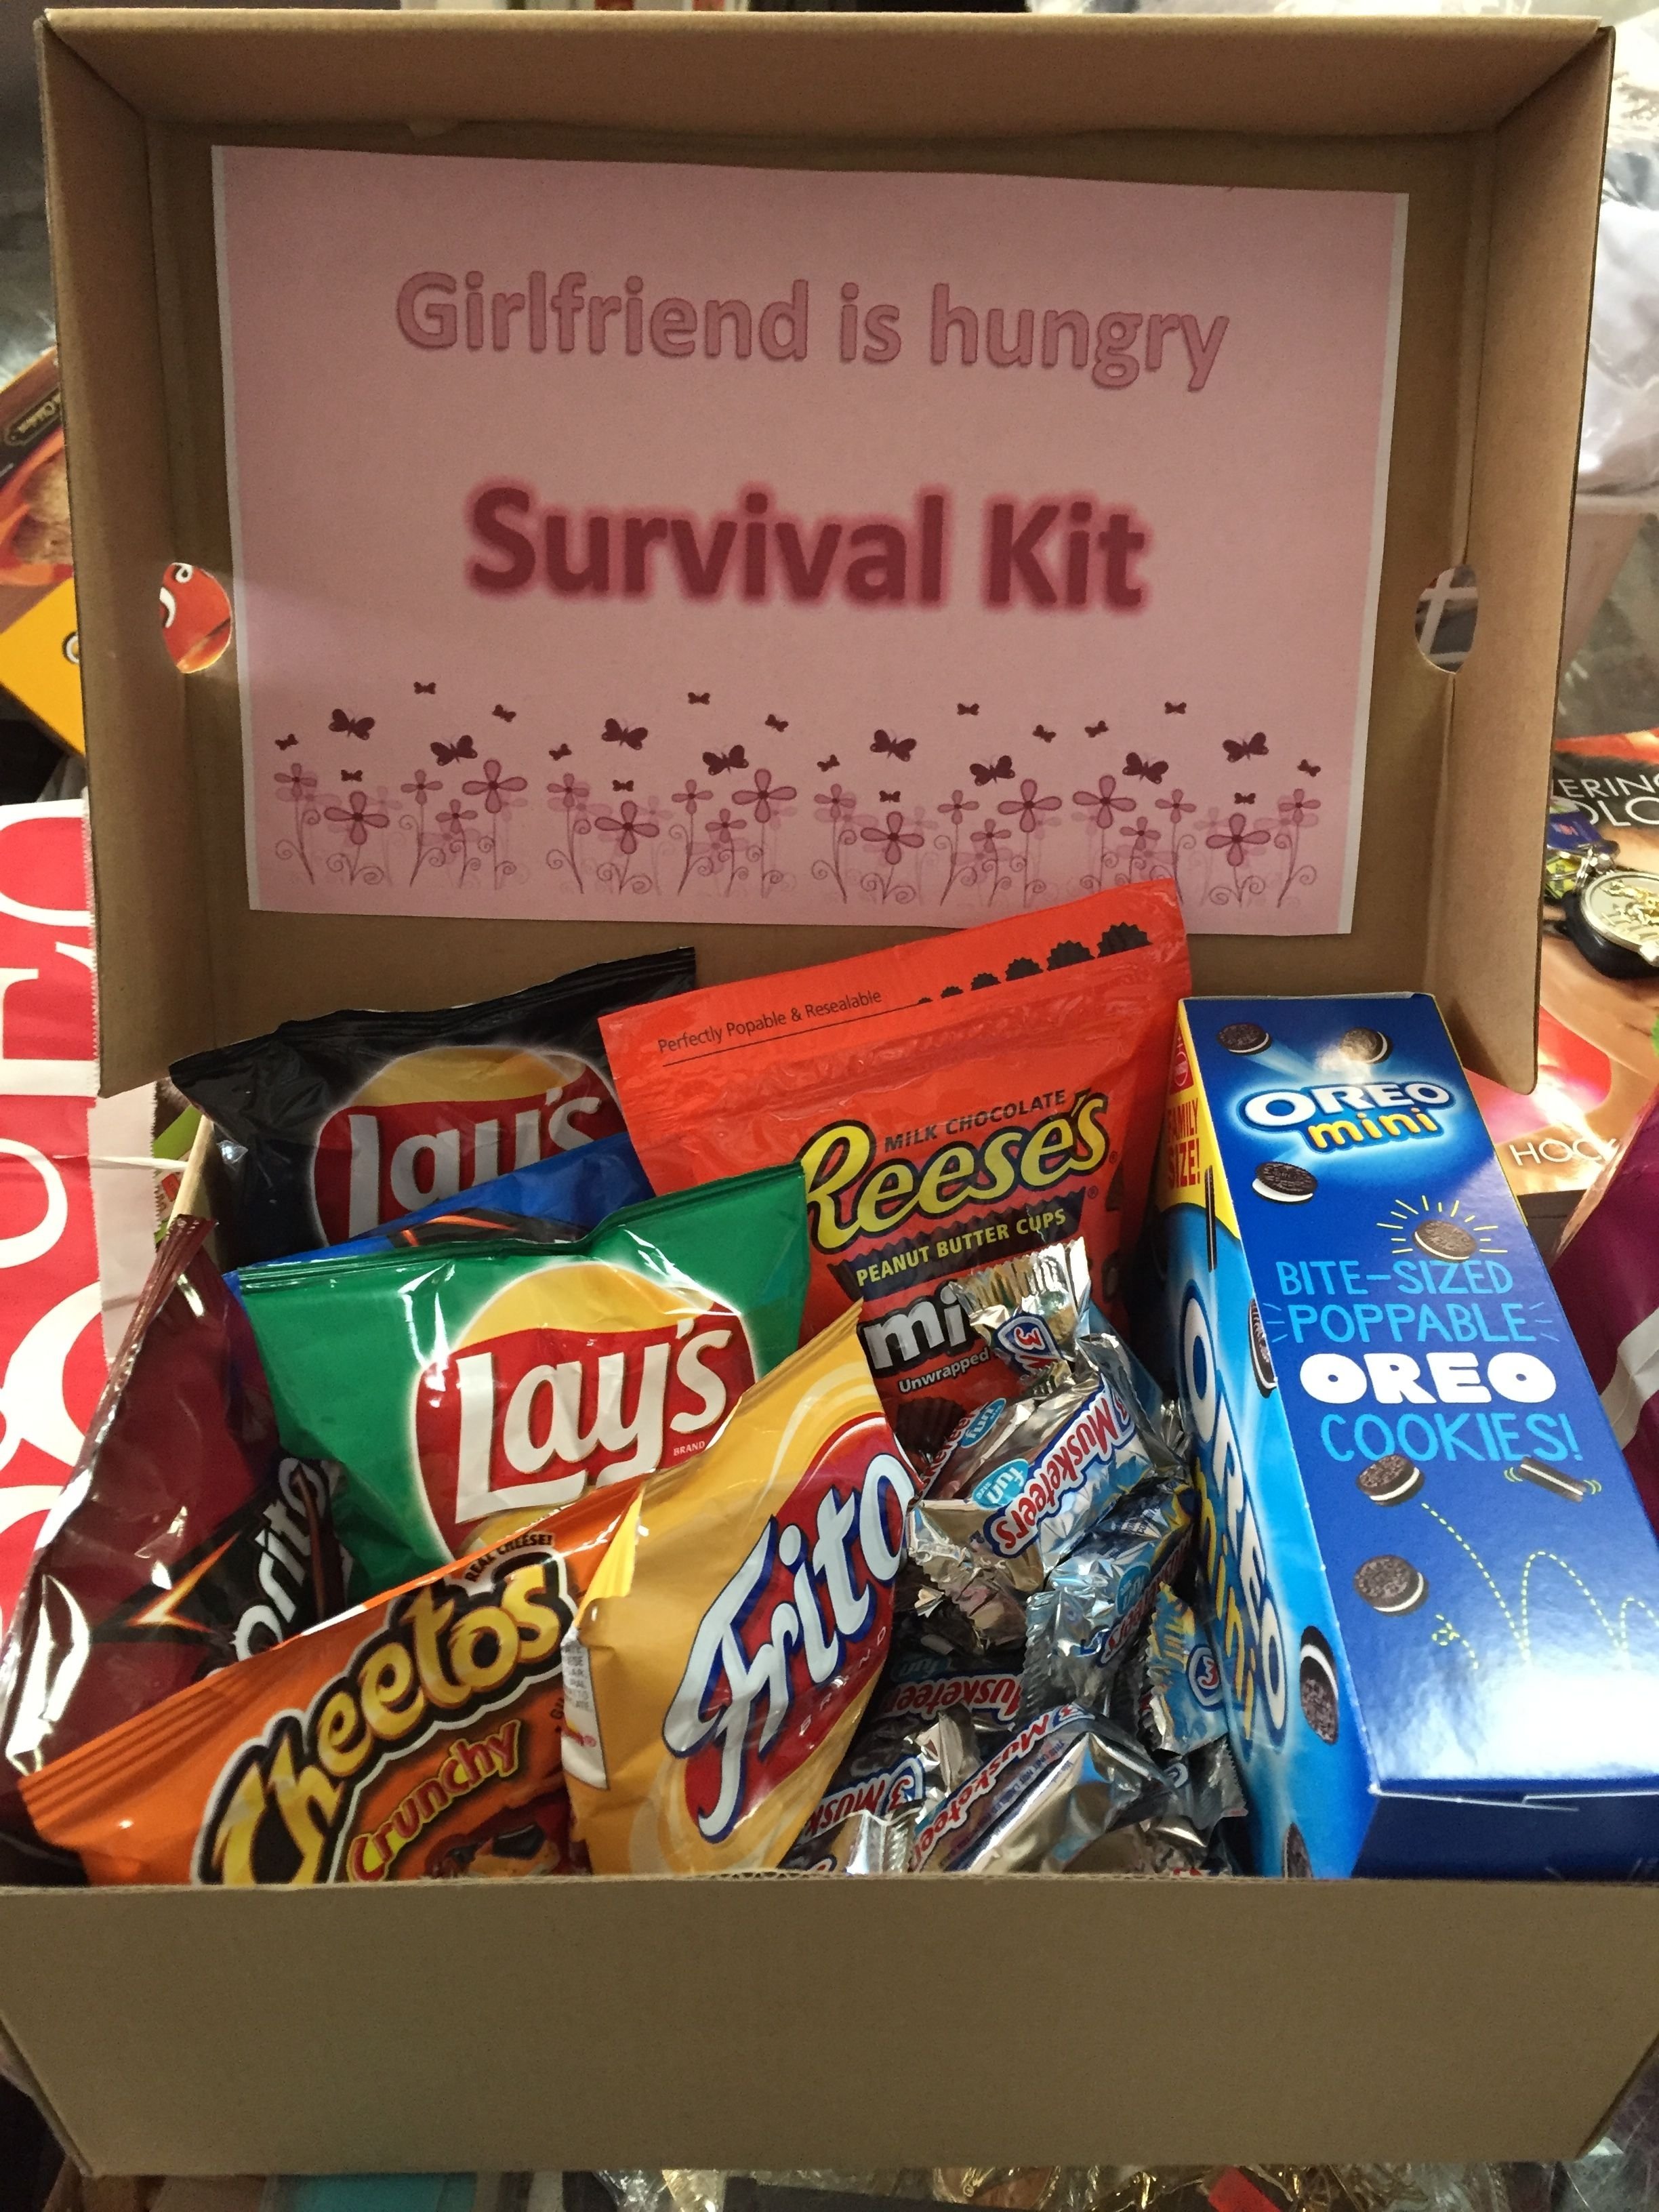 10 Famous Ideas To Surprise Your Girlfriend pintrey beckham on gf gift ideas pinterest survival kits 1 2022